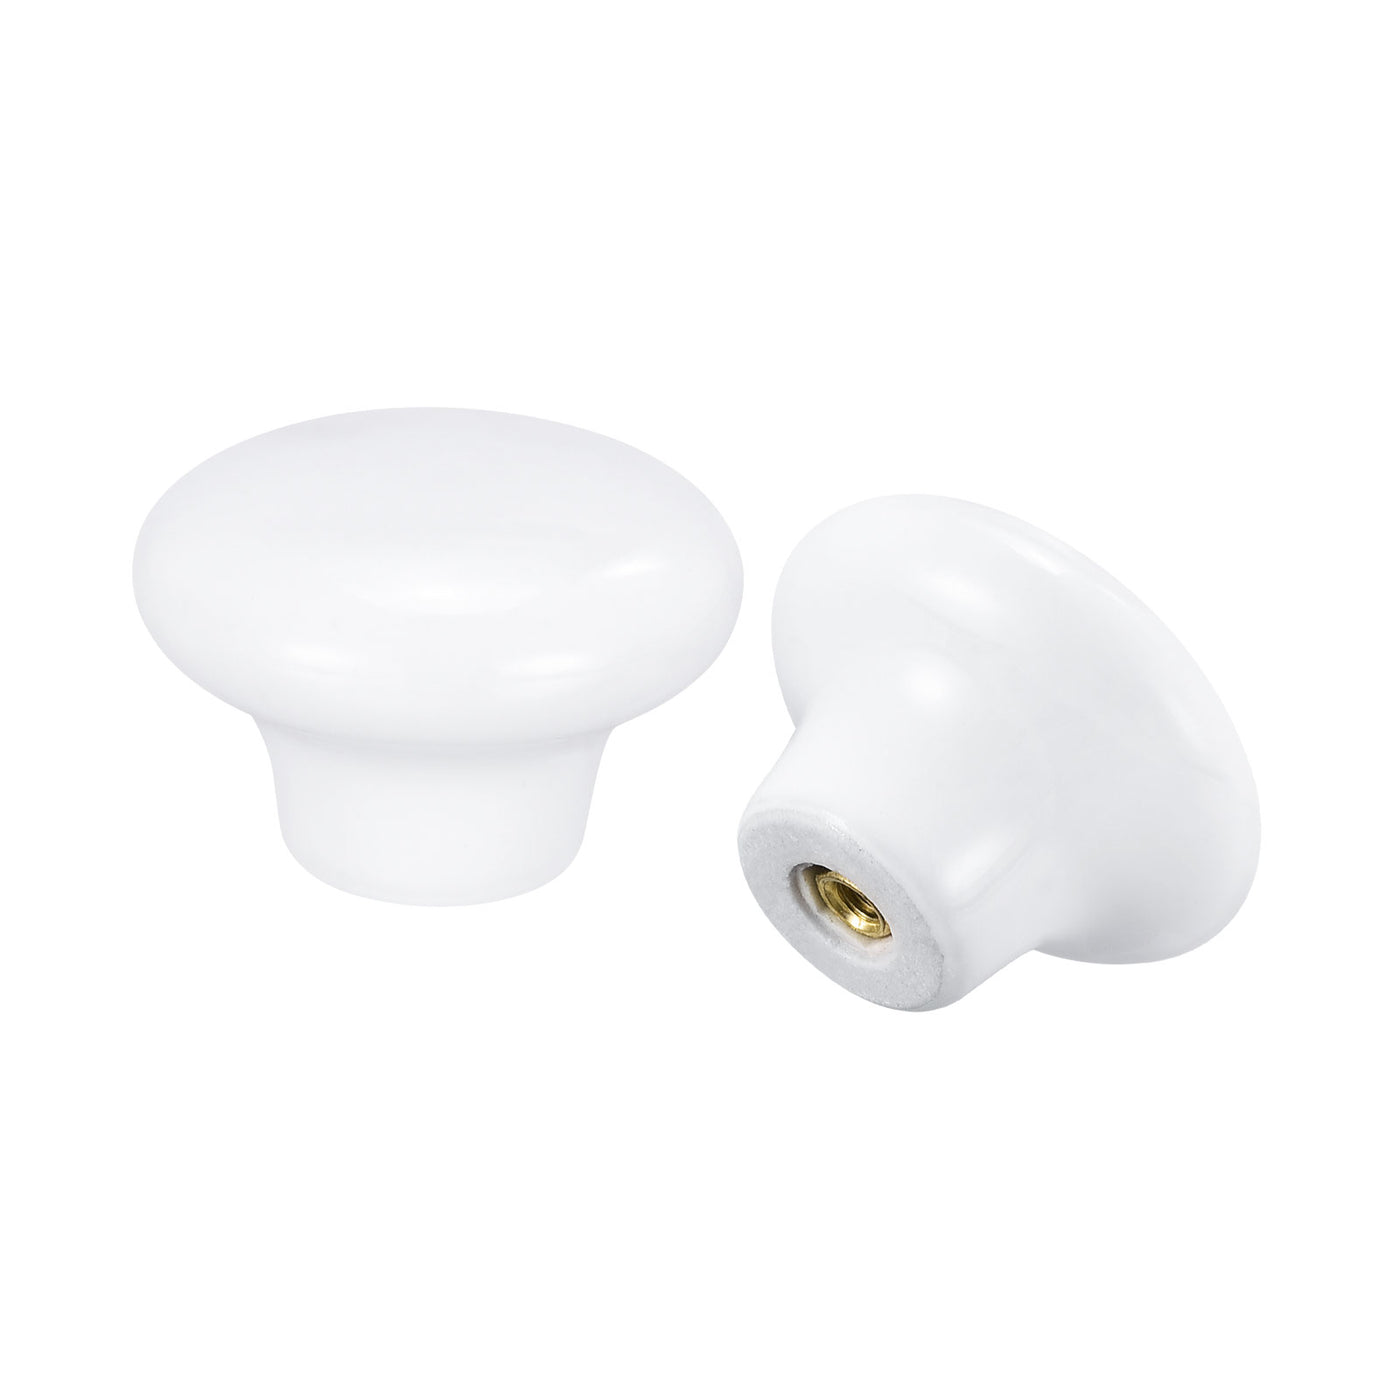 Uxcell Uxcell 38x28mm Ceramic Drawer Knobs, 10pcs Mushroom Shape Door Pull Handles White